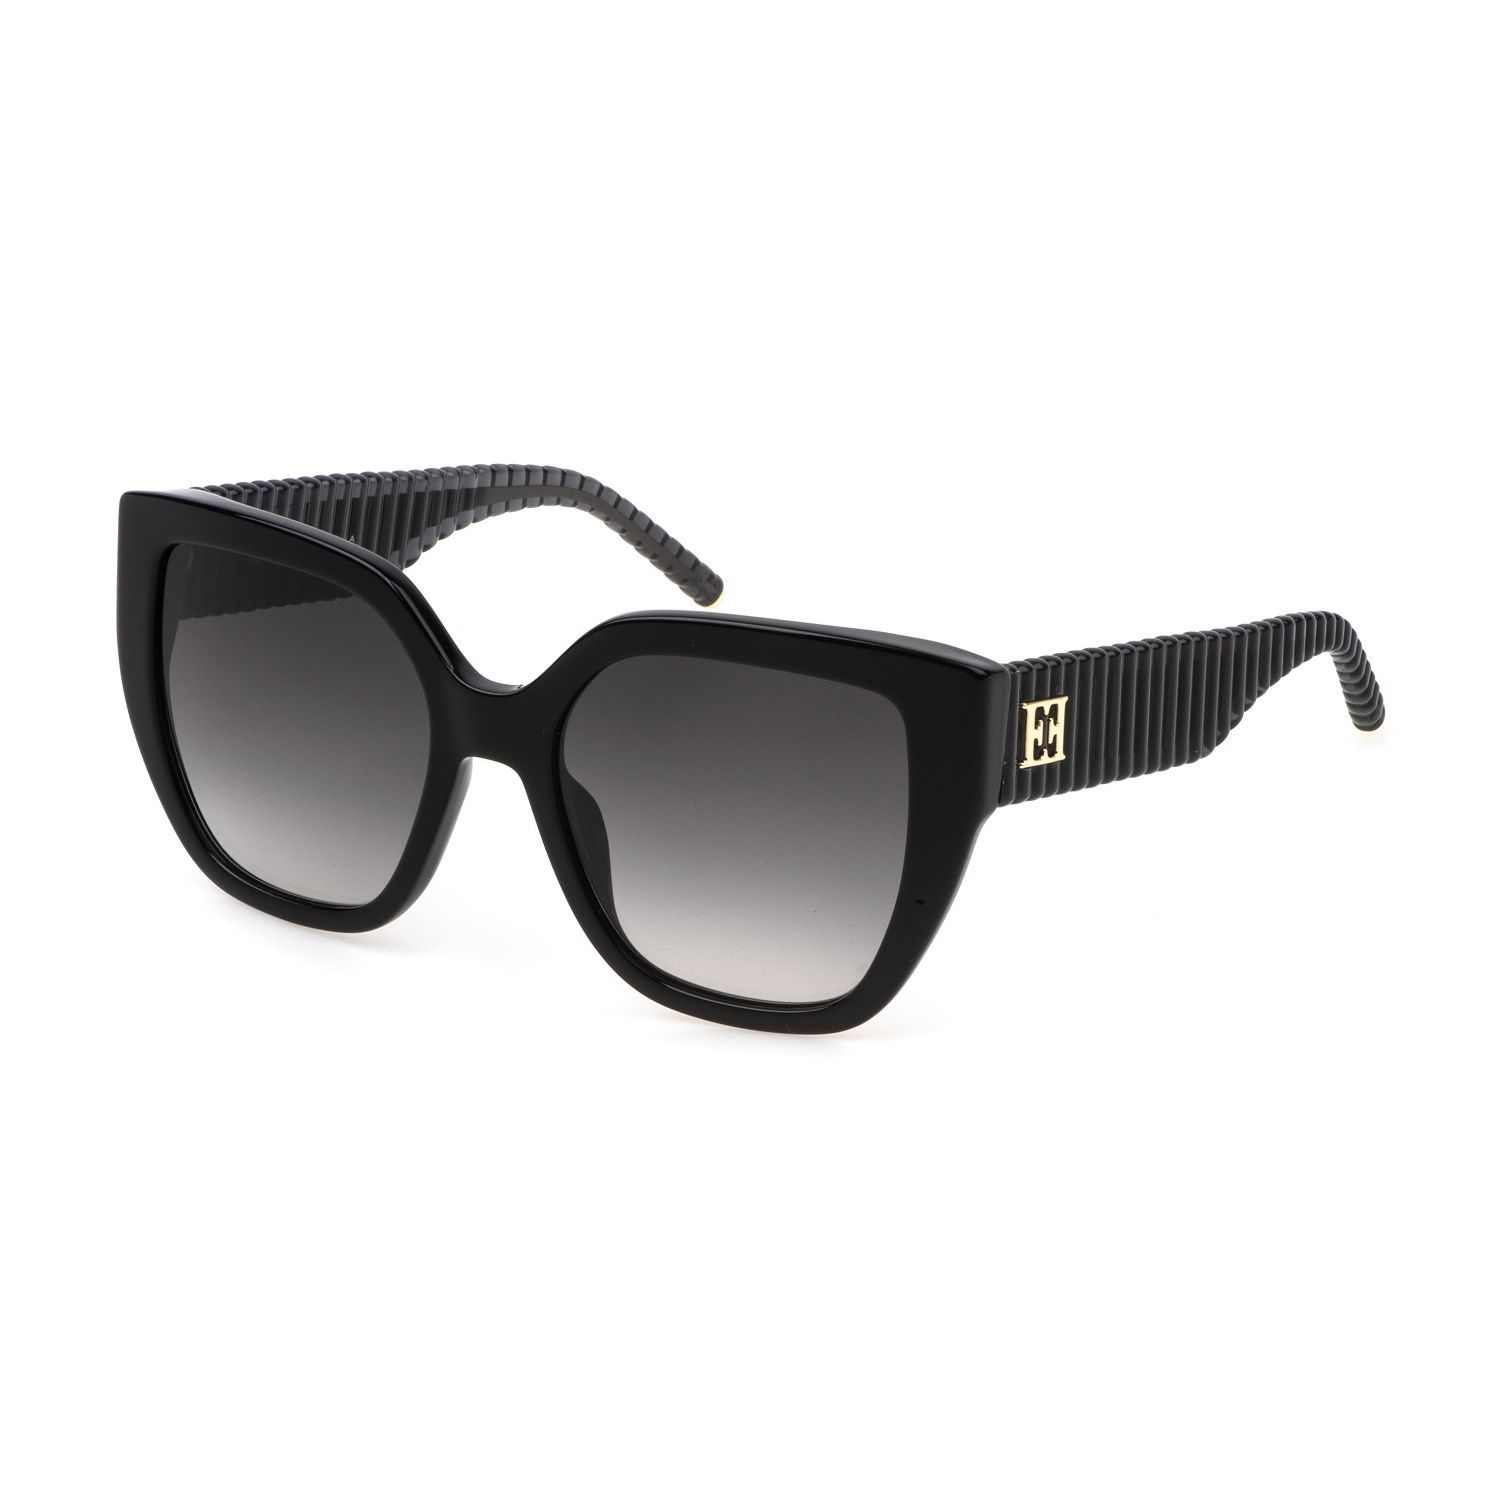 SESE44 Square Sunglasses 0700 - size 54